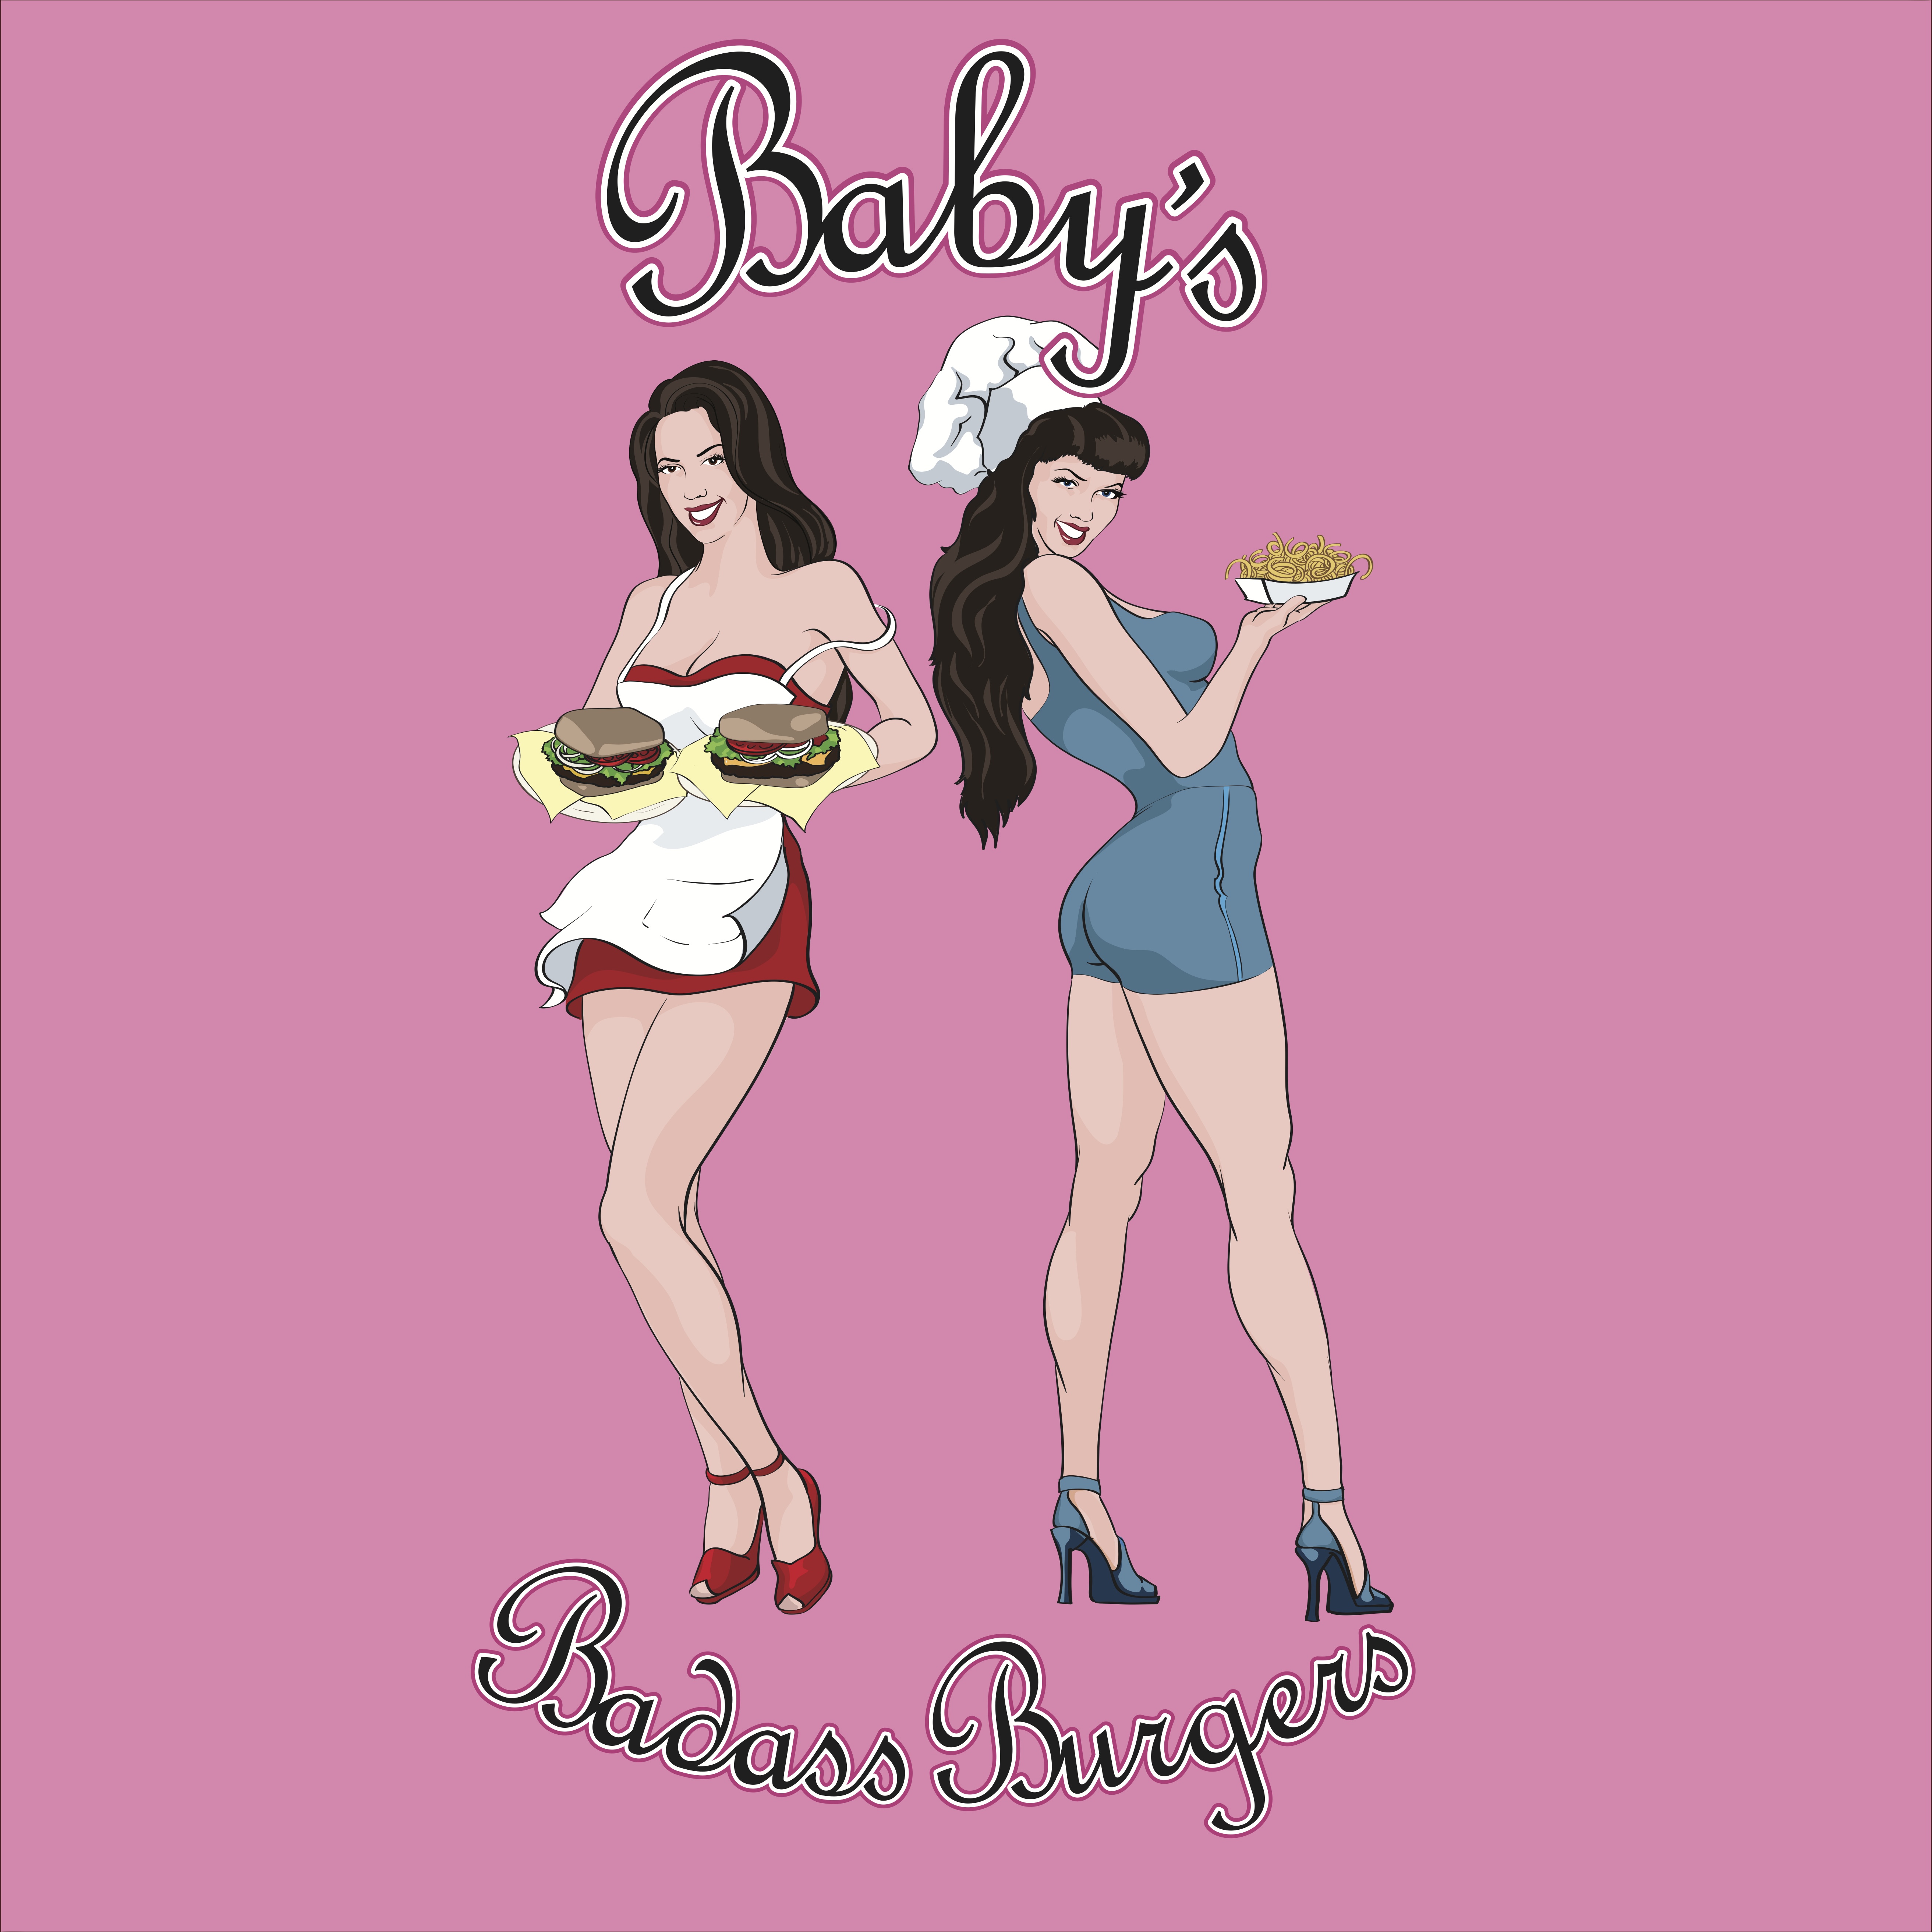 Babys-Logo-w-Girls-and-Words-copy.jpg